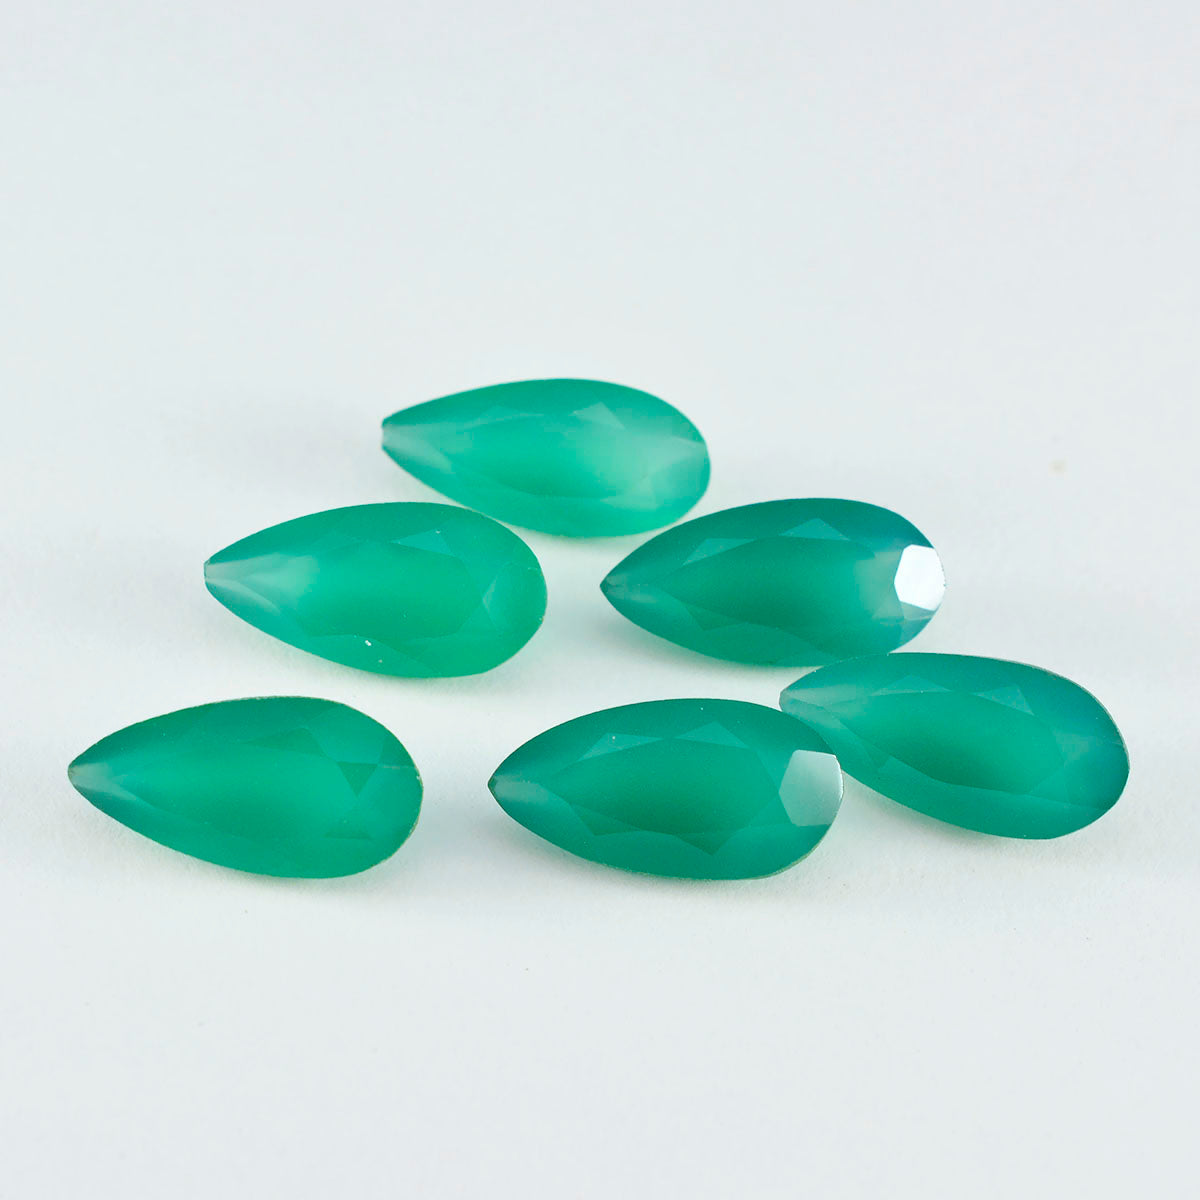 Riyogems 1PC Natural Green Onyx Faceted 7X14 mm Pear Shape cute Quality Stone